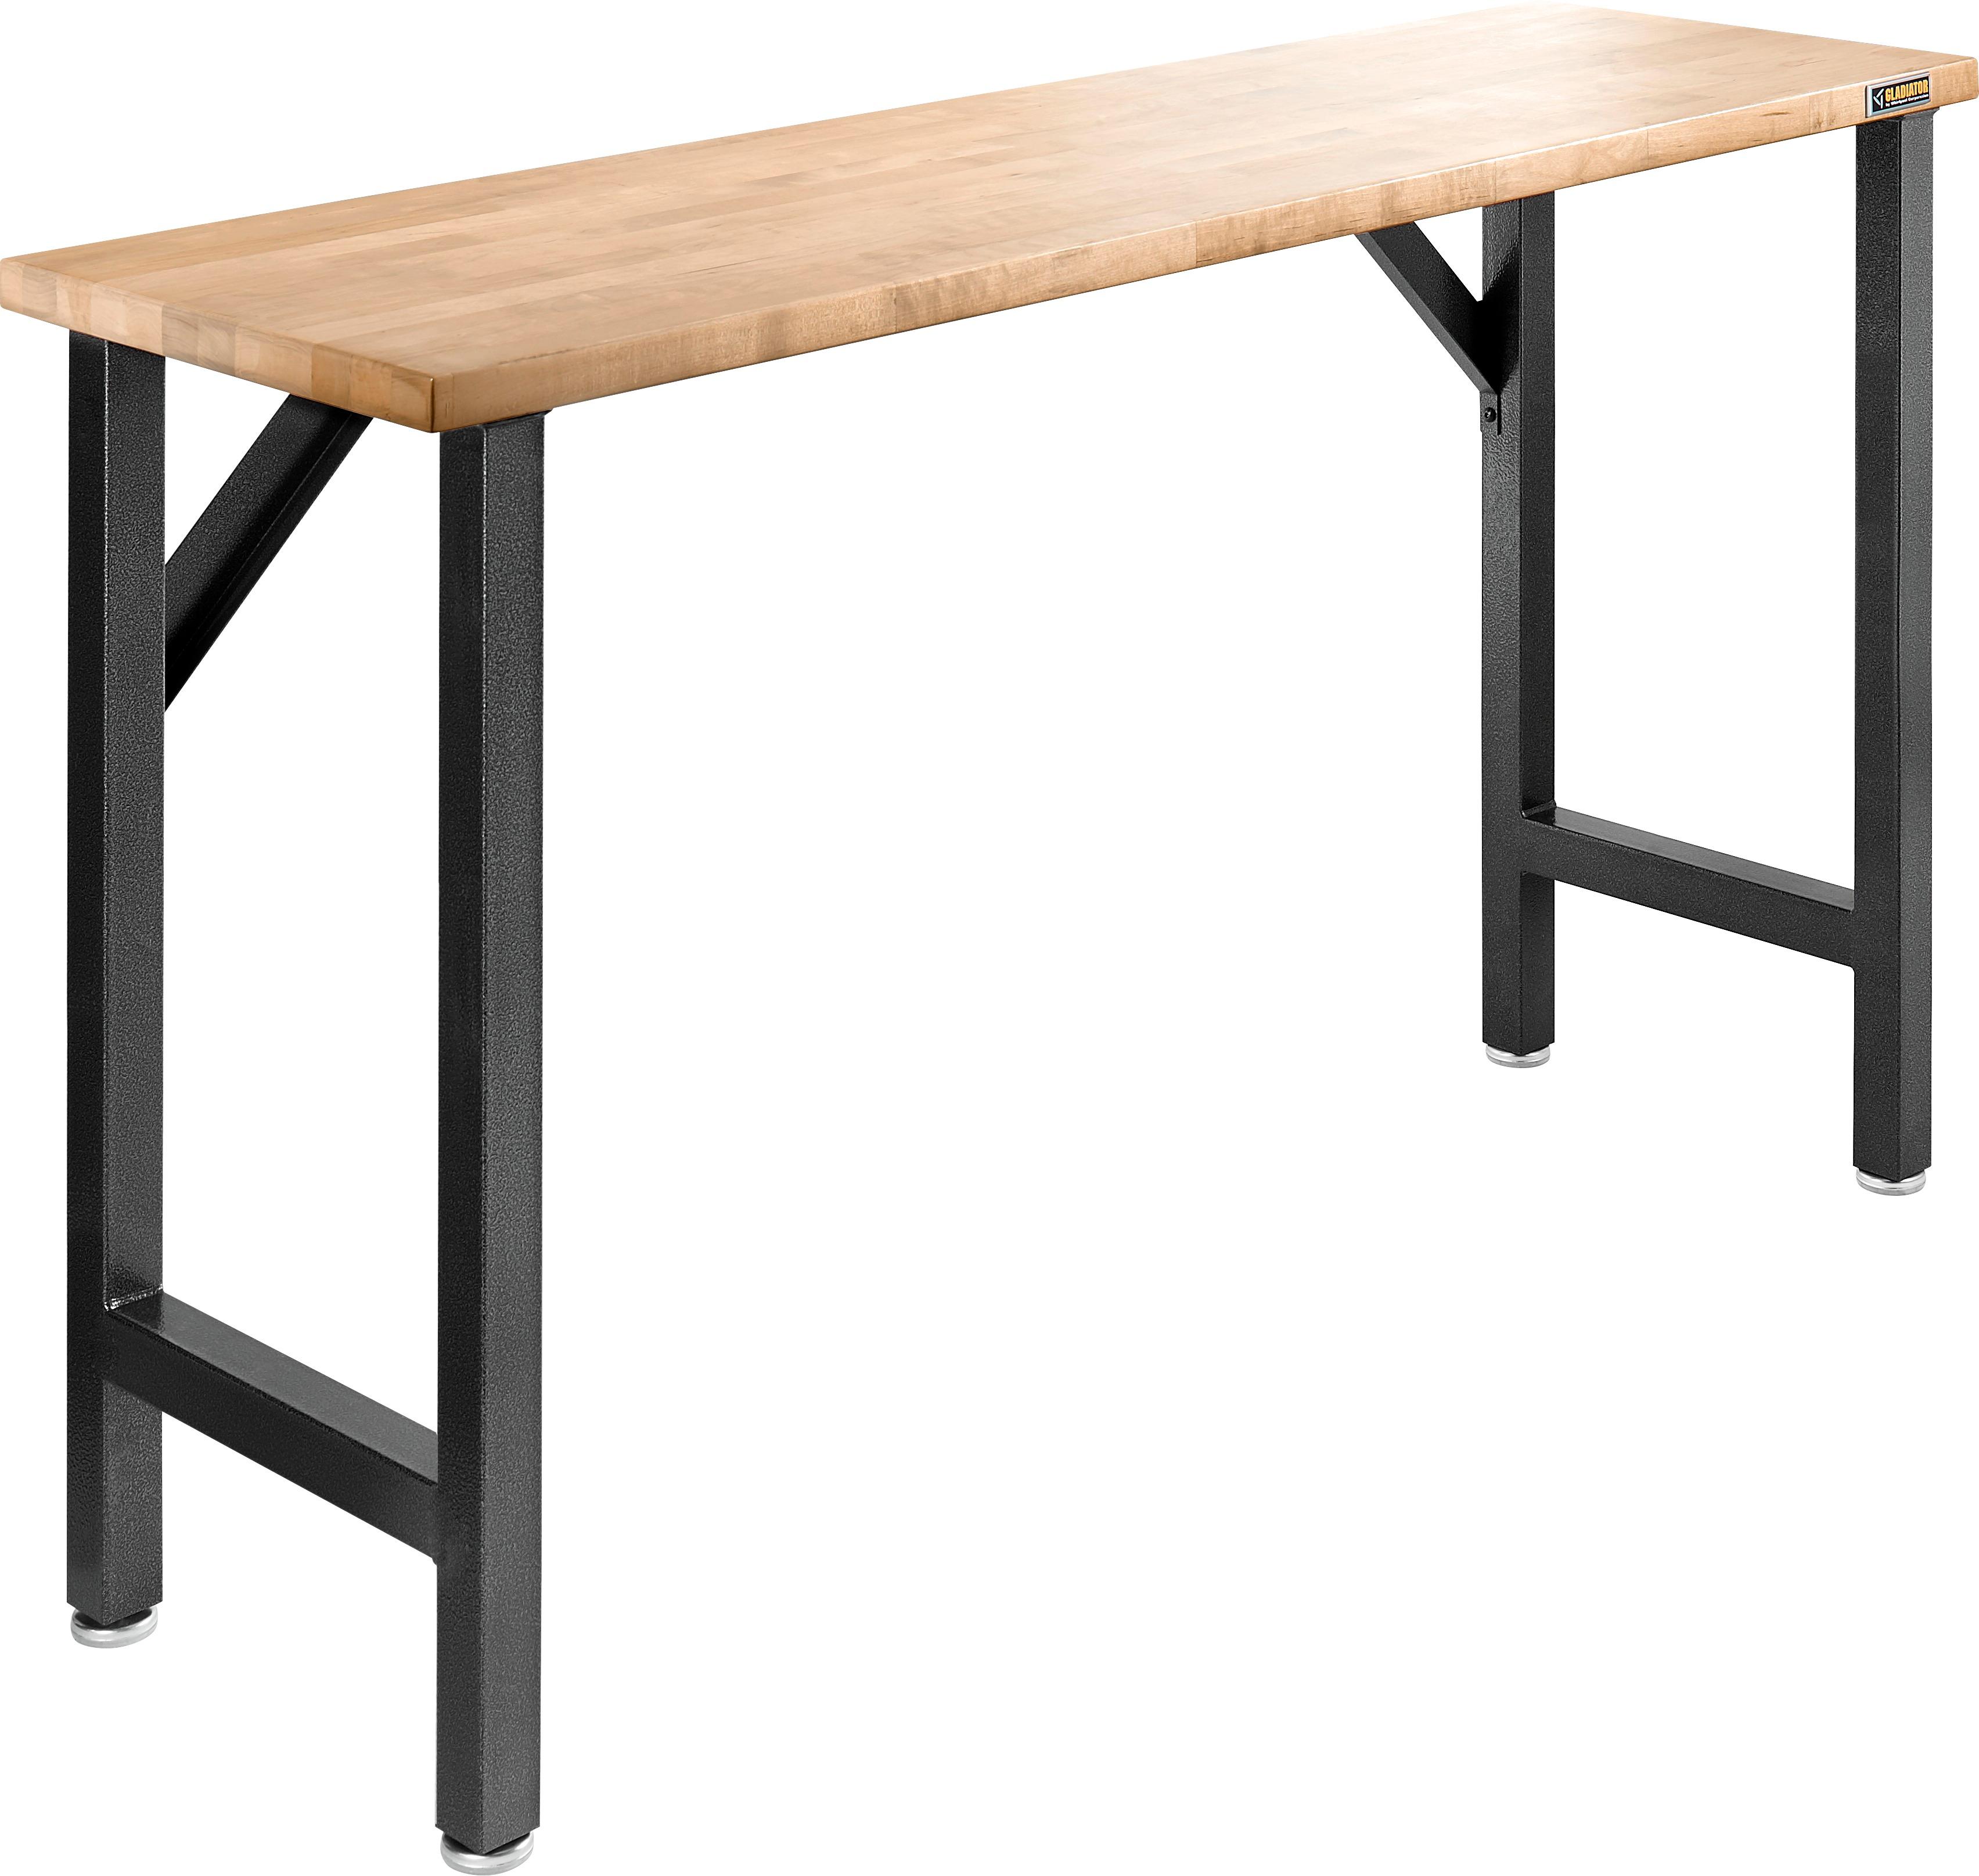 Angle View: WorkSmart - Resin Table - Gray